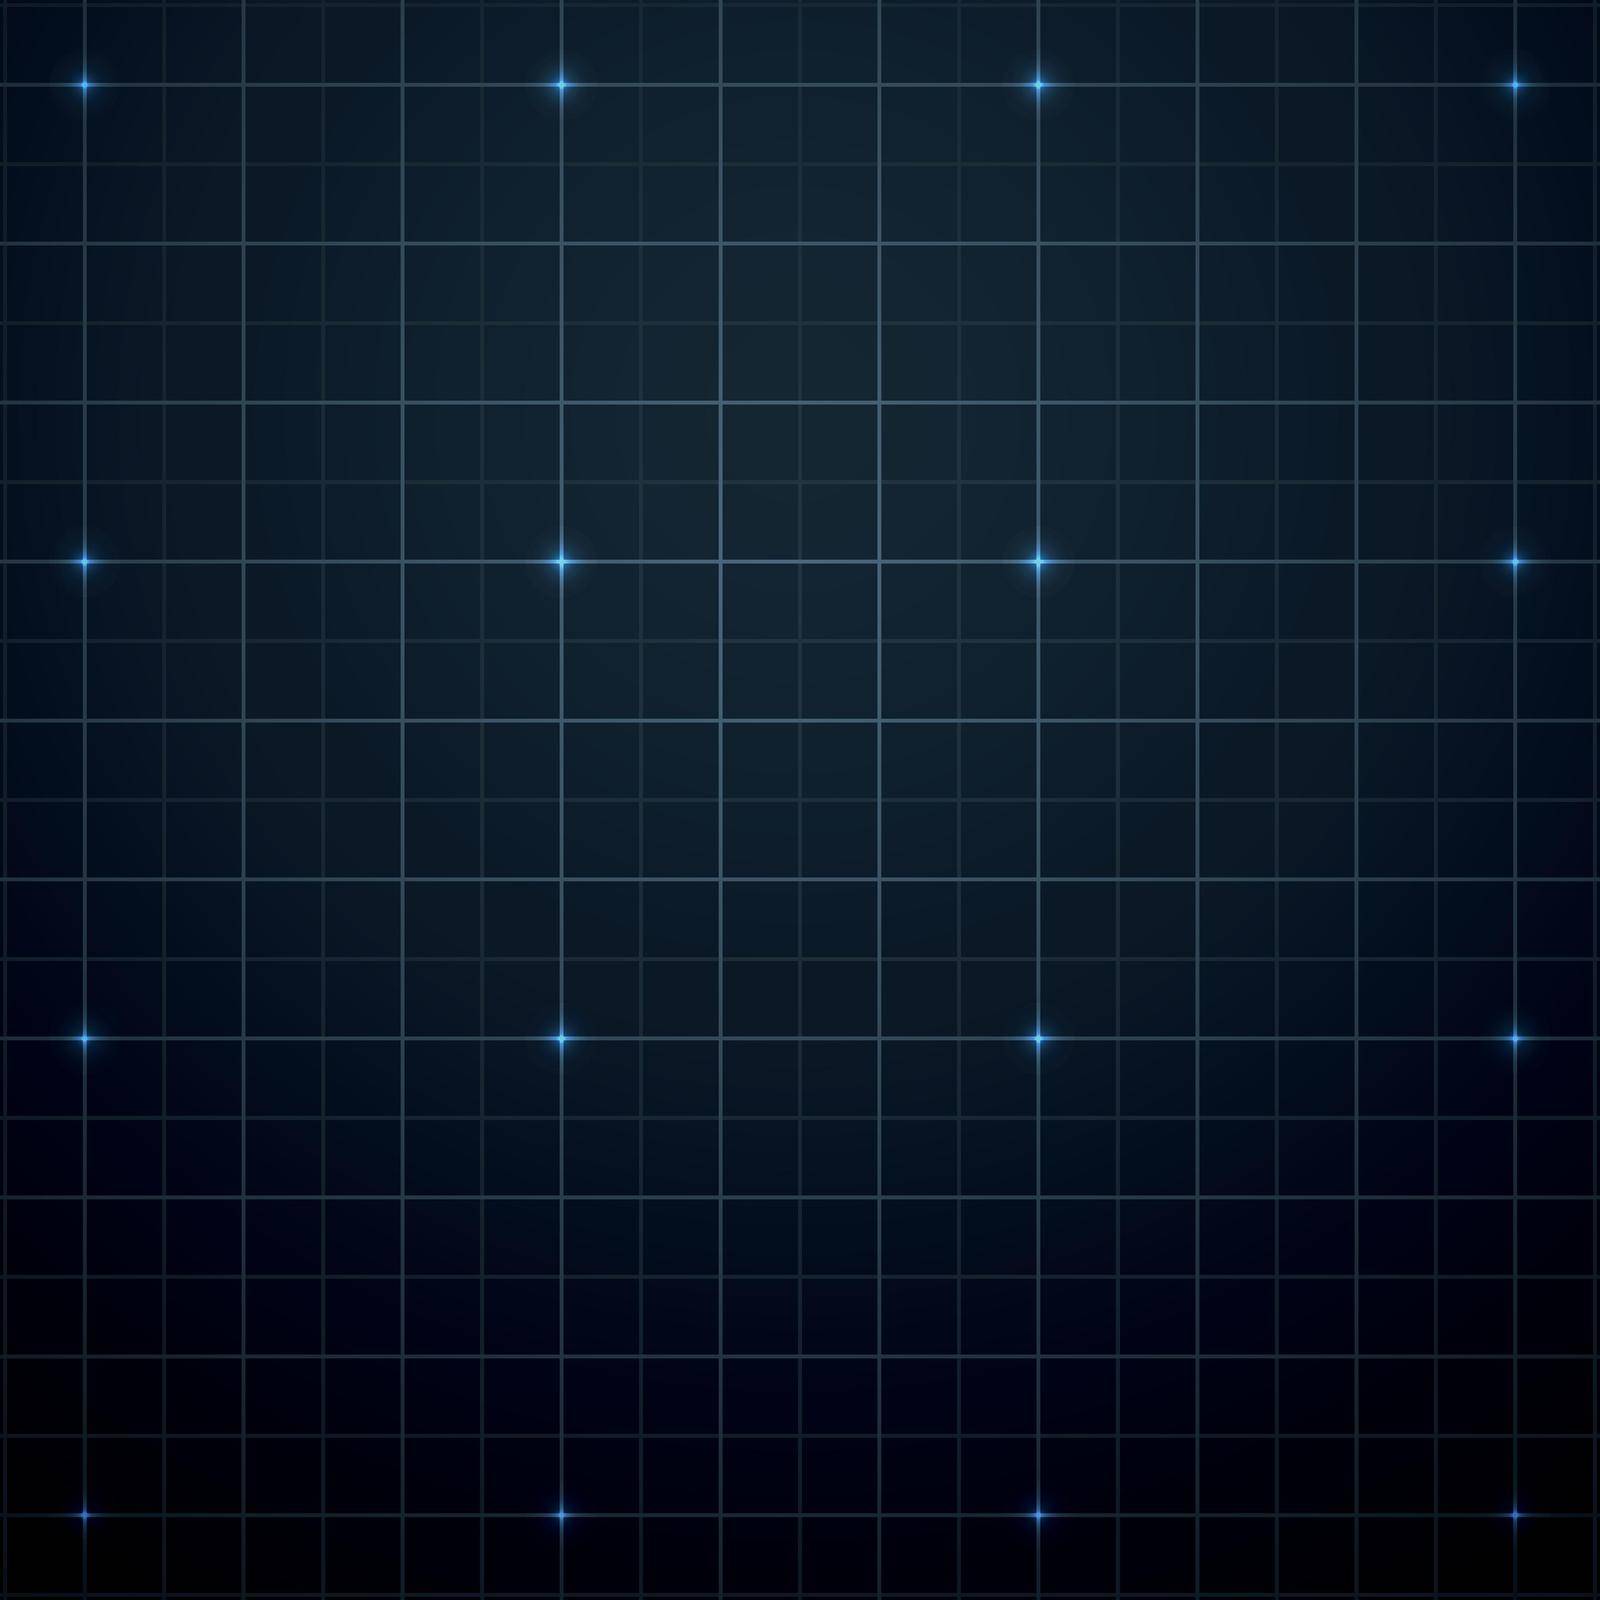 Futuristic square grid. Digital screen with line pattern. Vector illustration